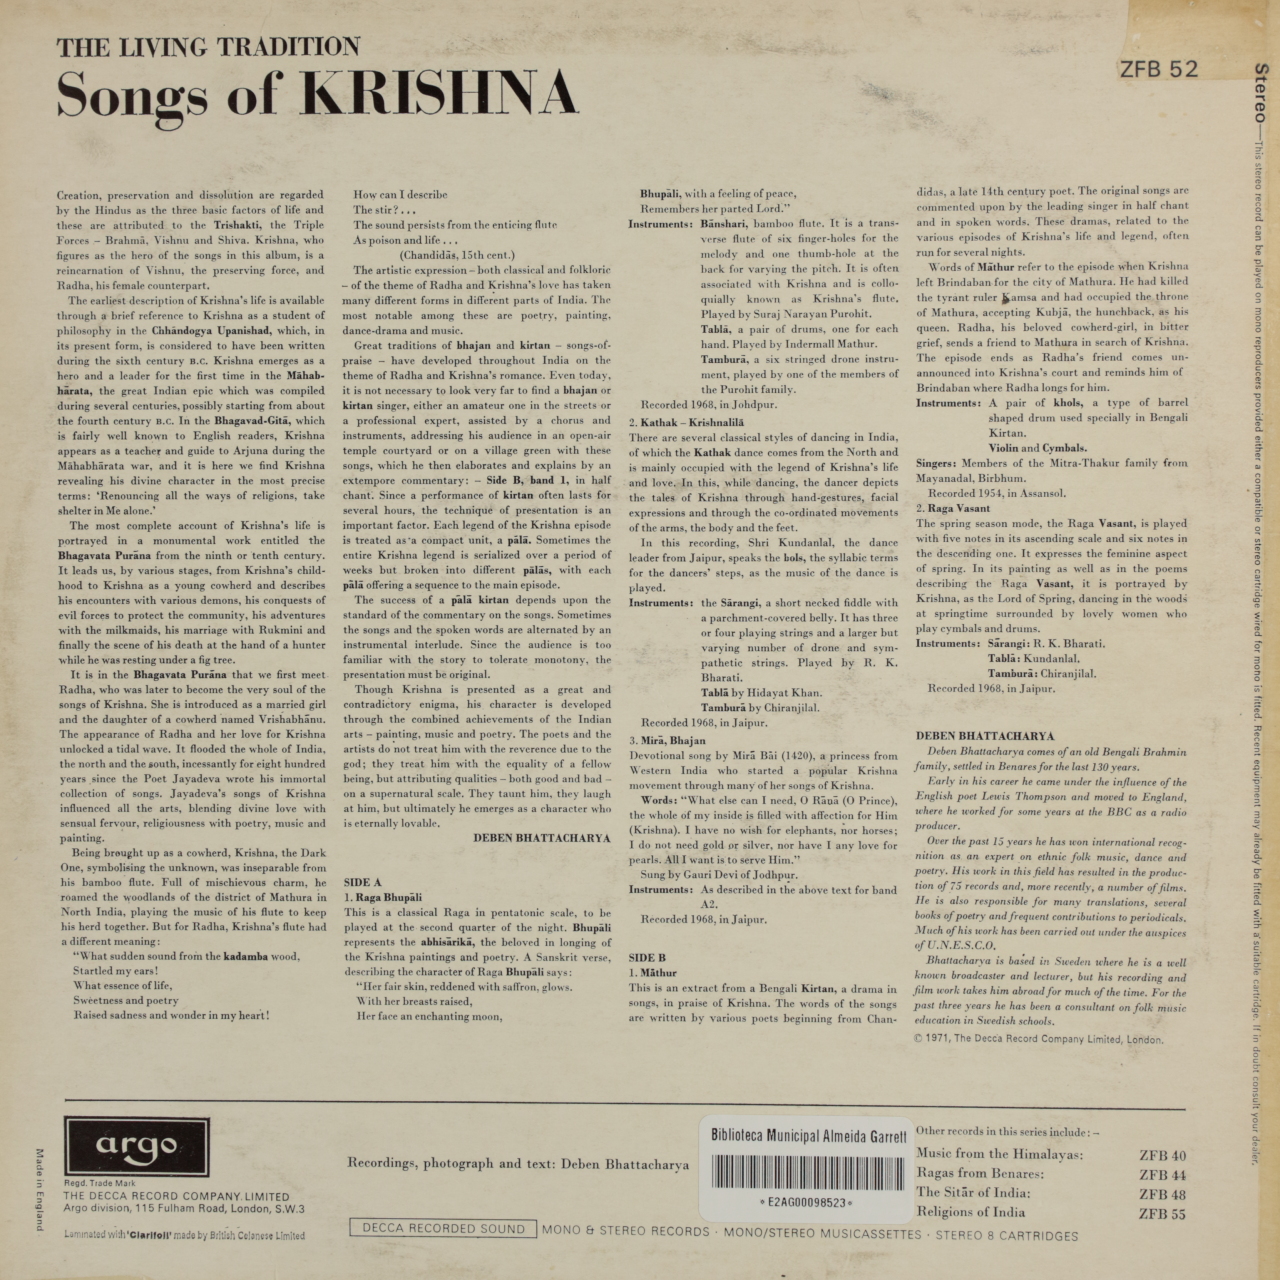 Songs of Krishna